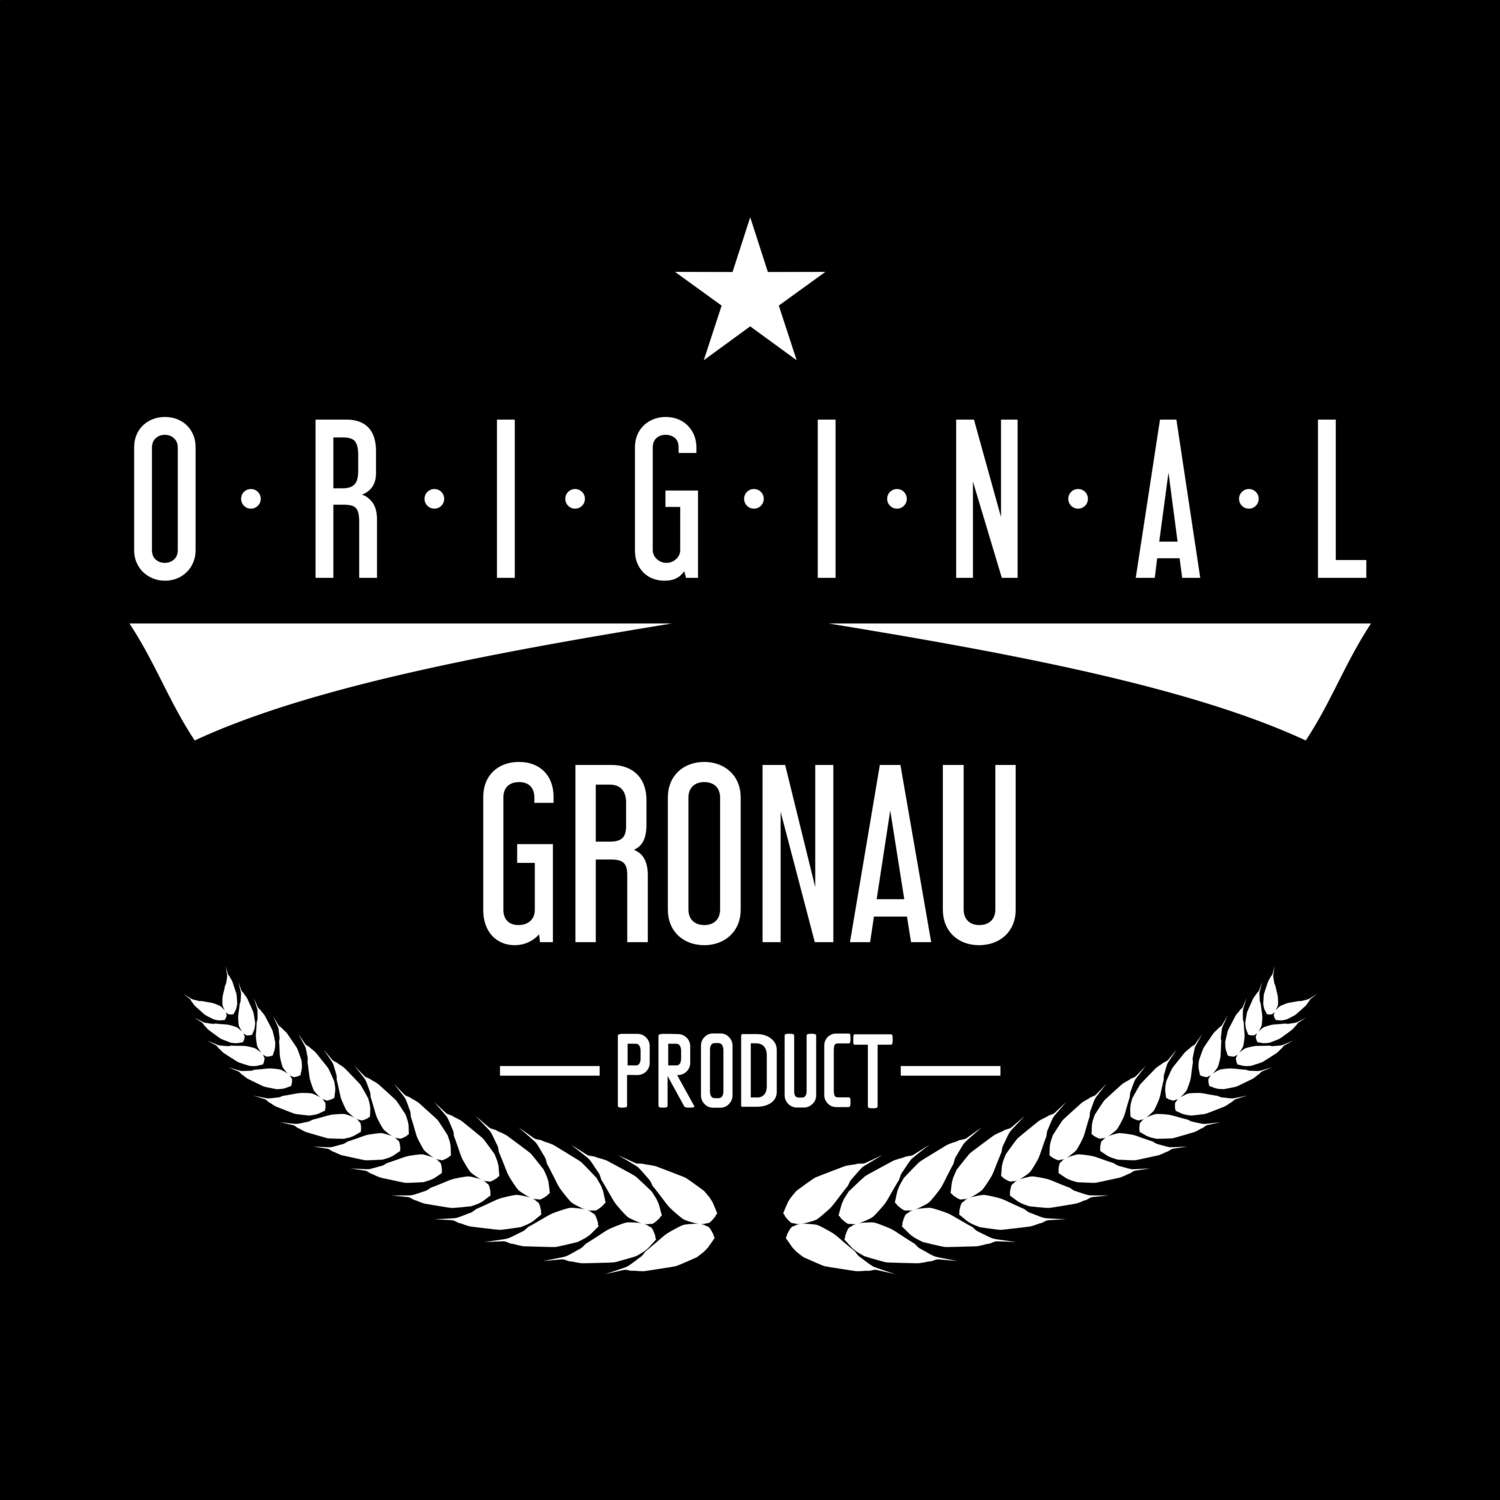 Gronau T-Shirt »Original Product«